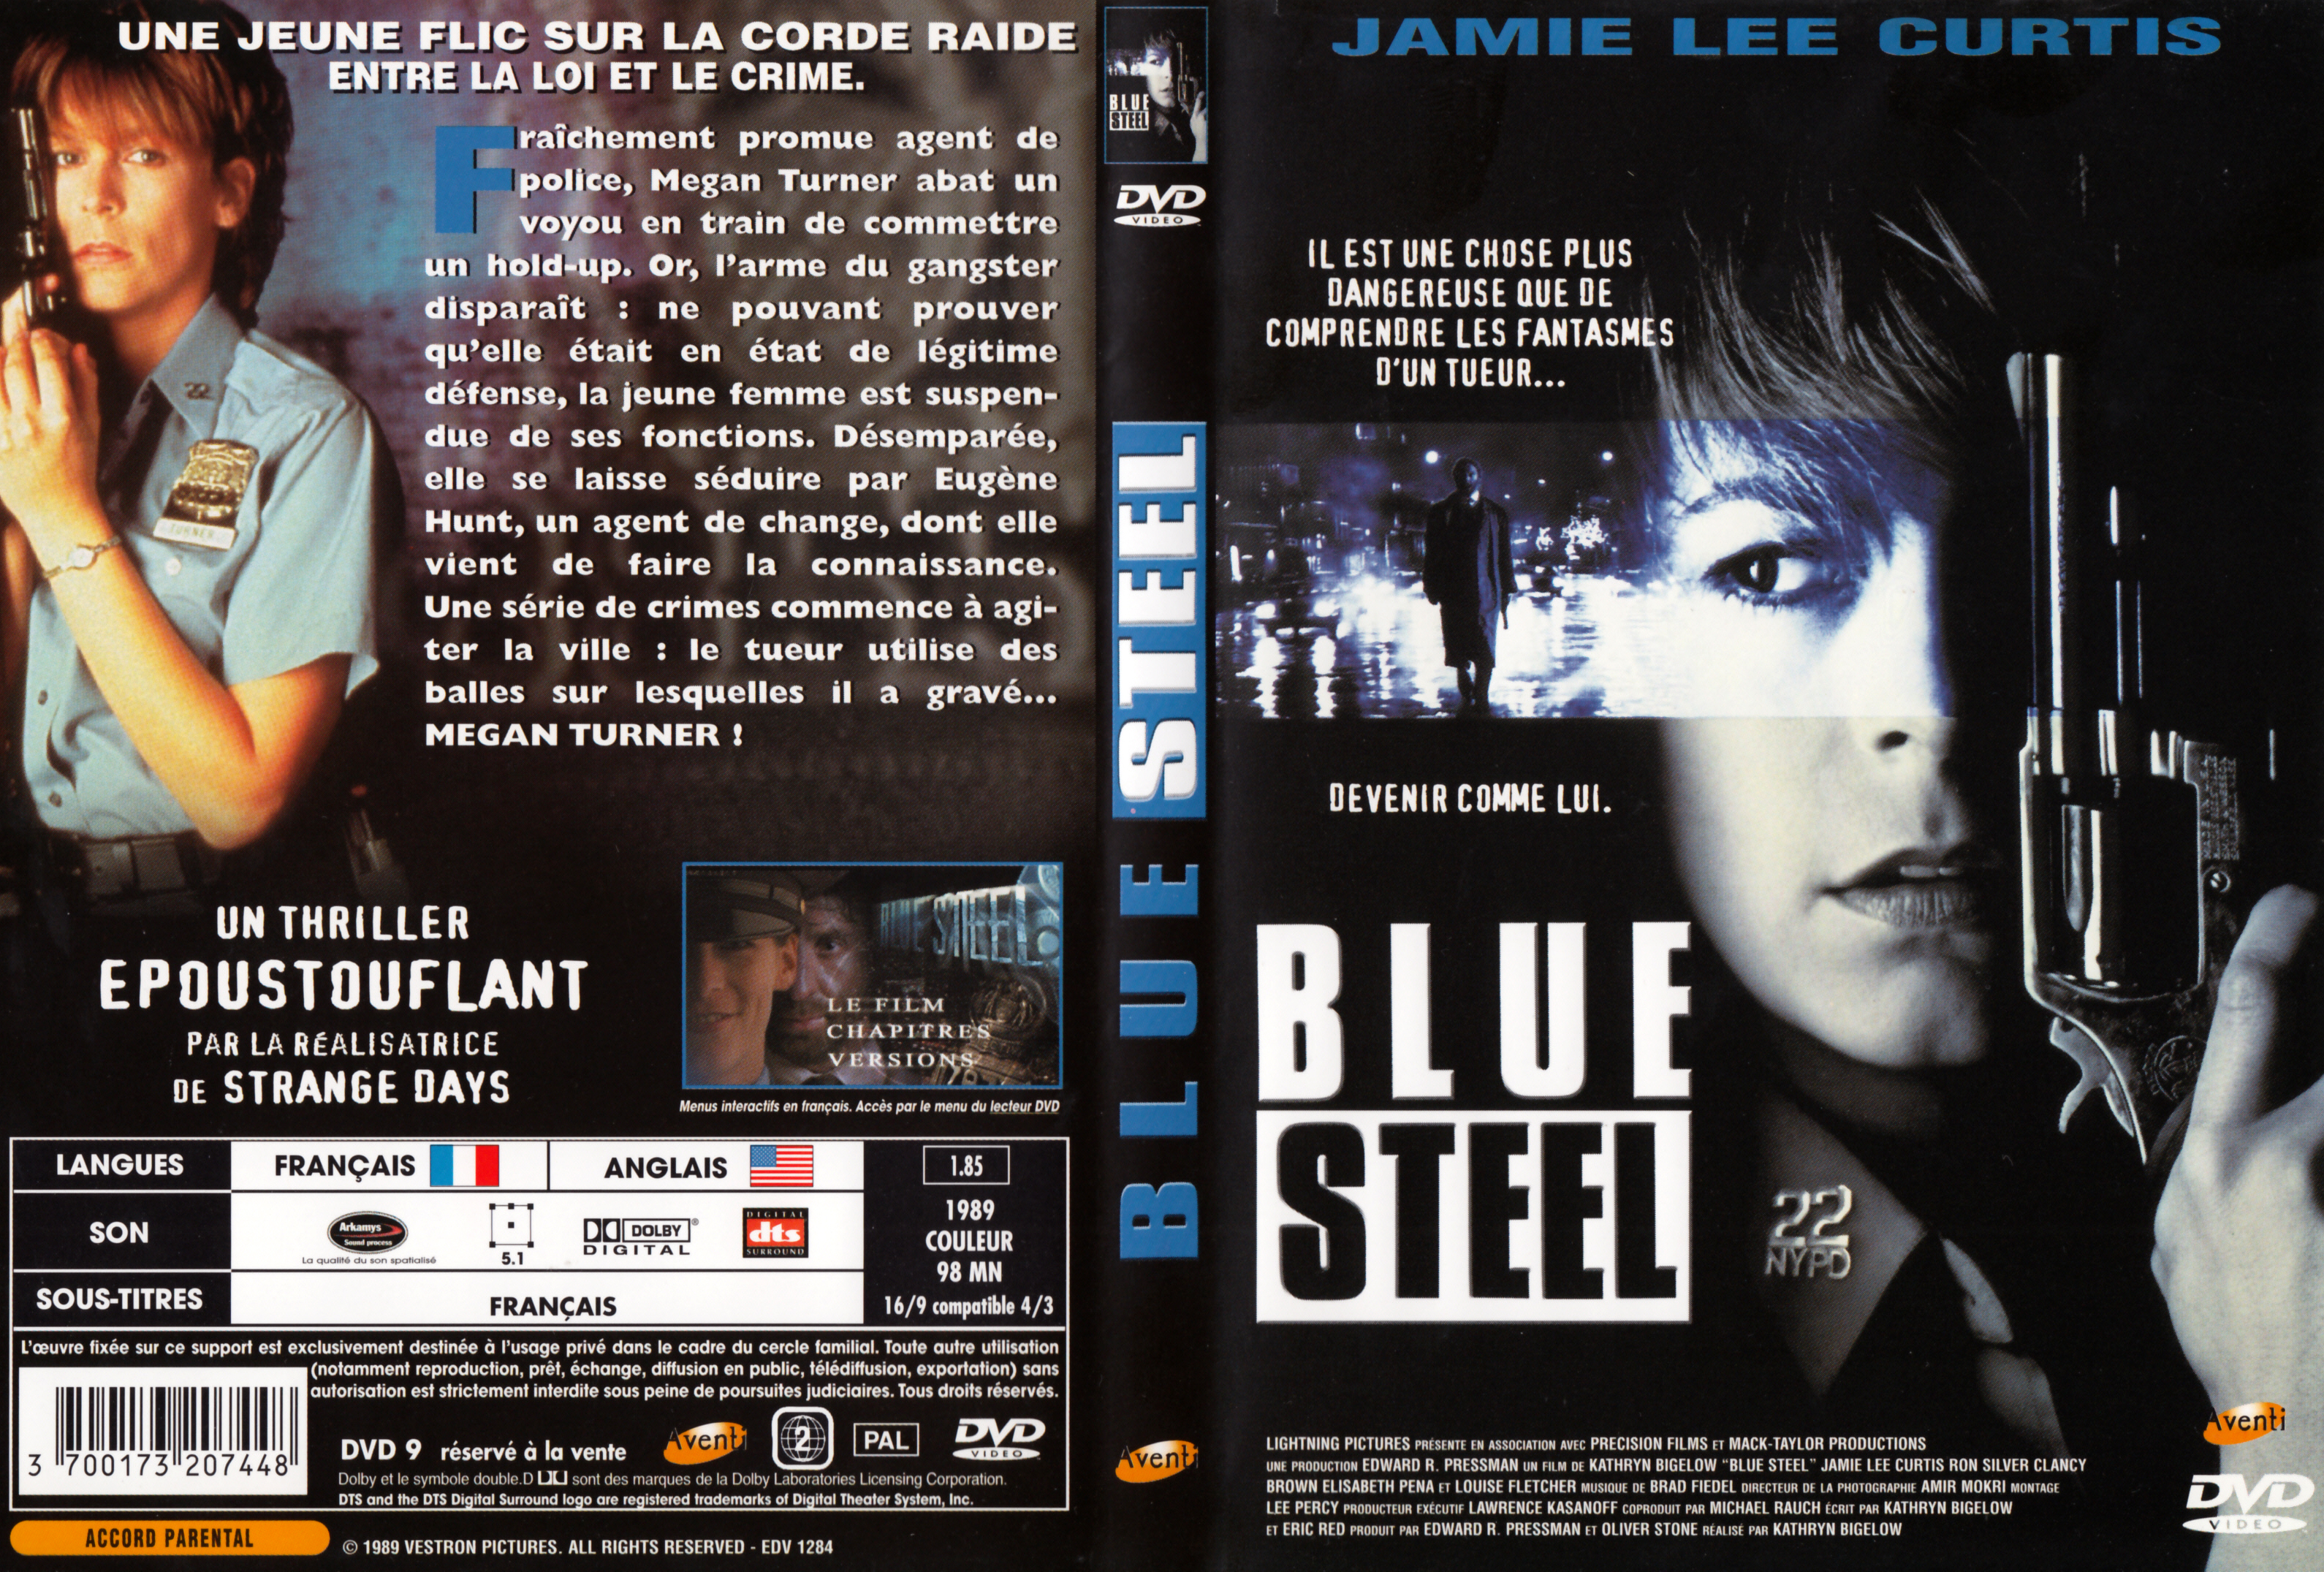 Jaquette DVD Blue Steel